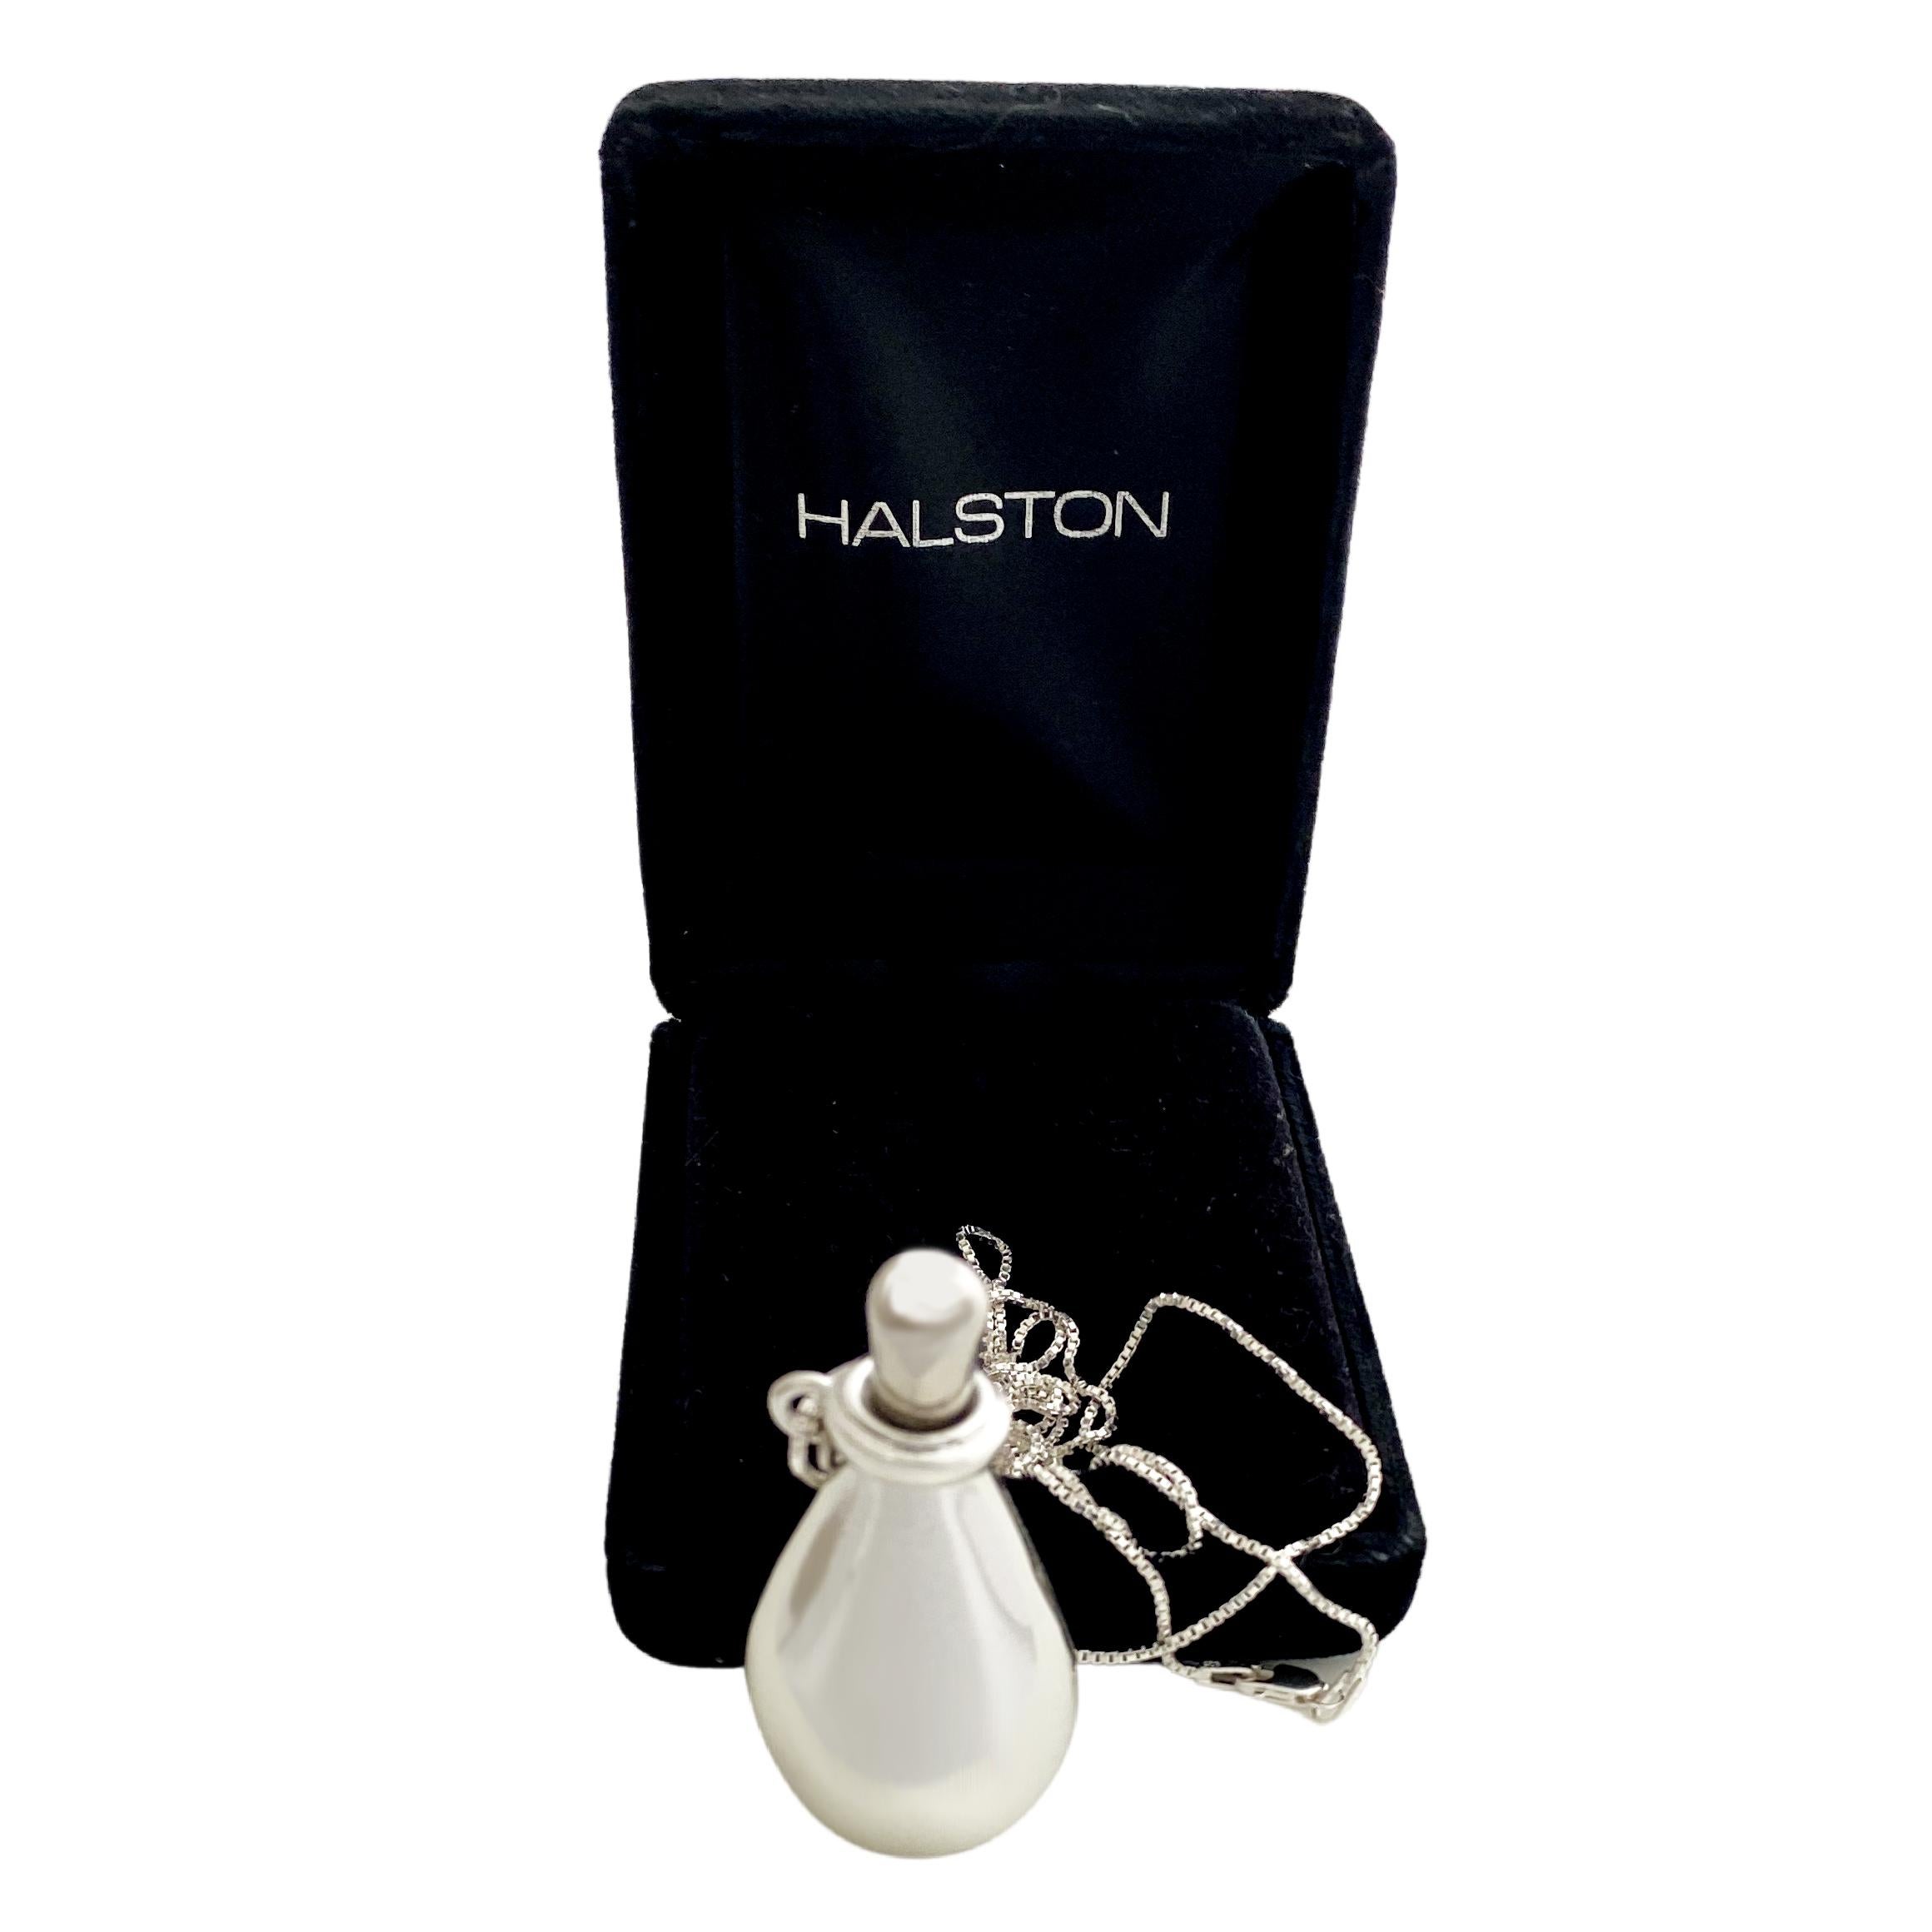 Elsa Peretti for Halston Perfume Bottle Pendant Necklace Sterling Chain 2